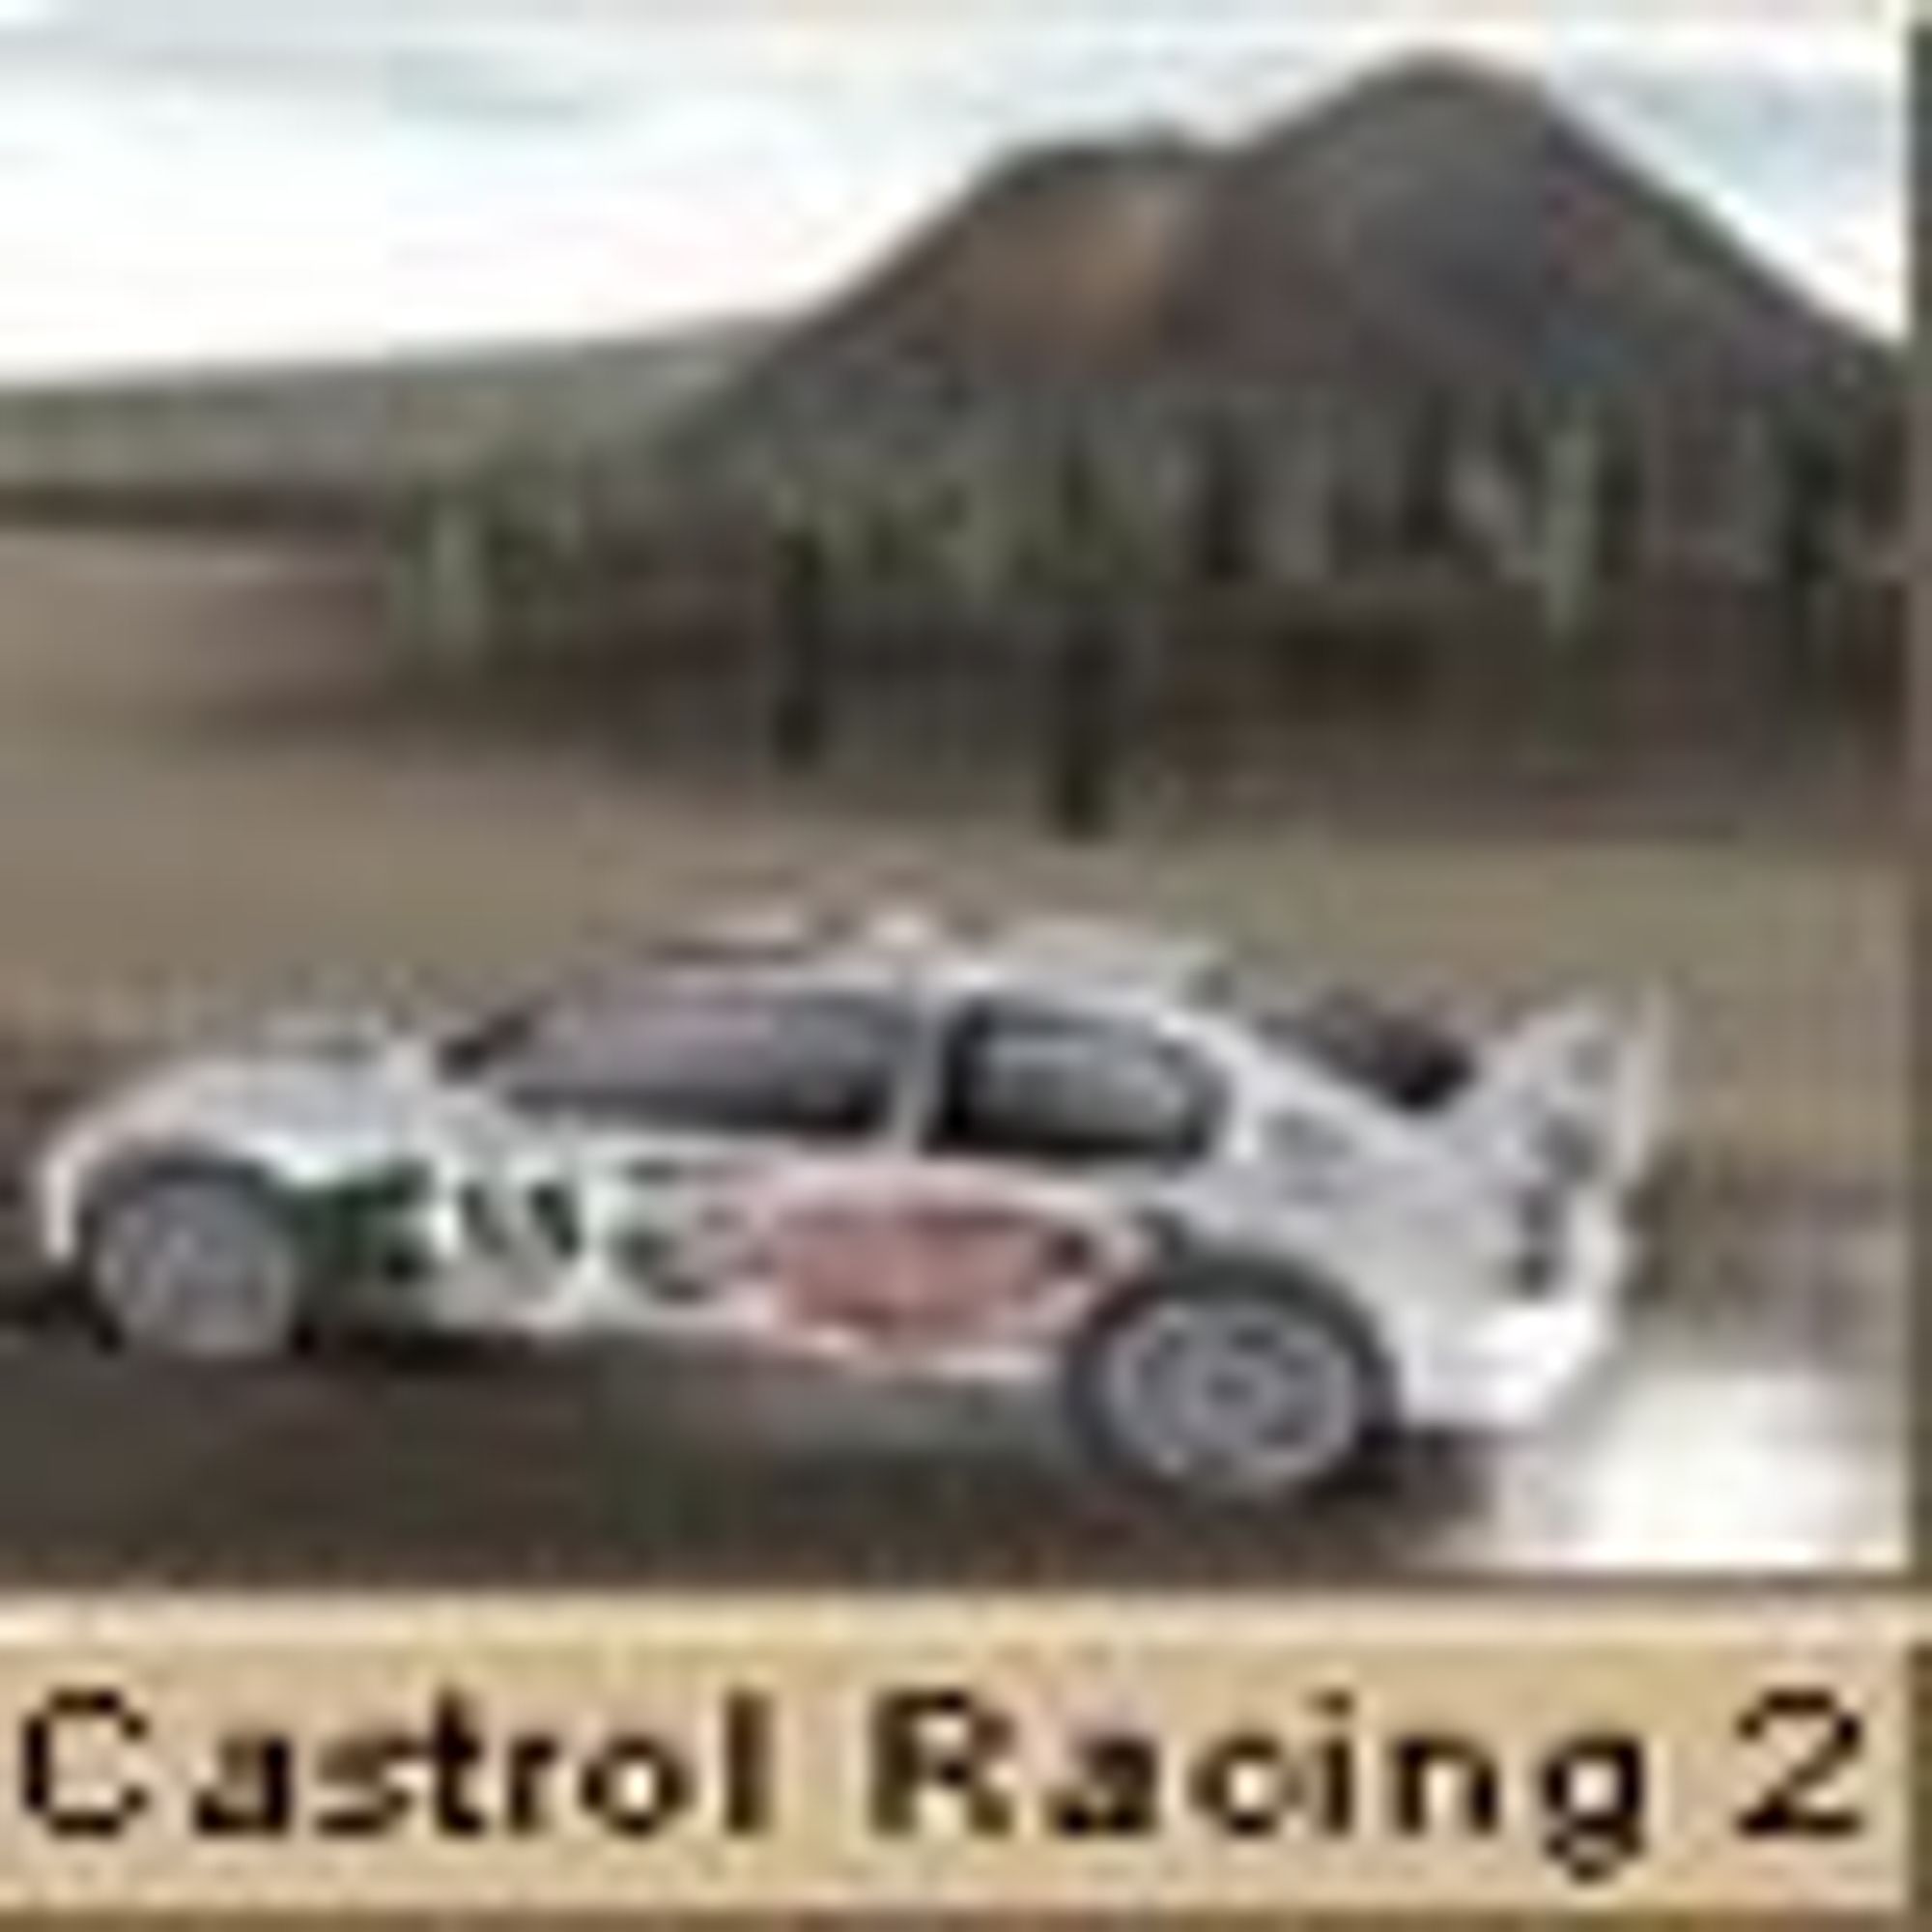 Vignett for Miniatrix Castrol Racing 2.